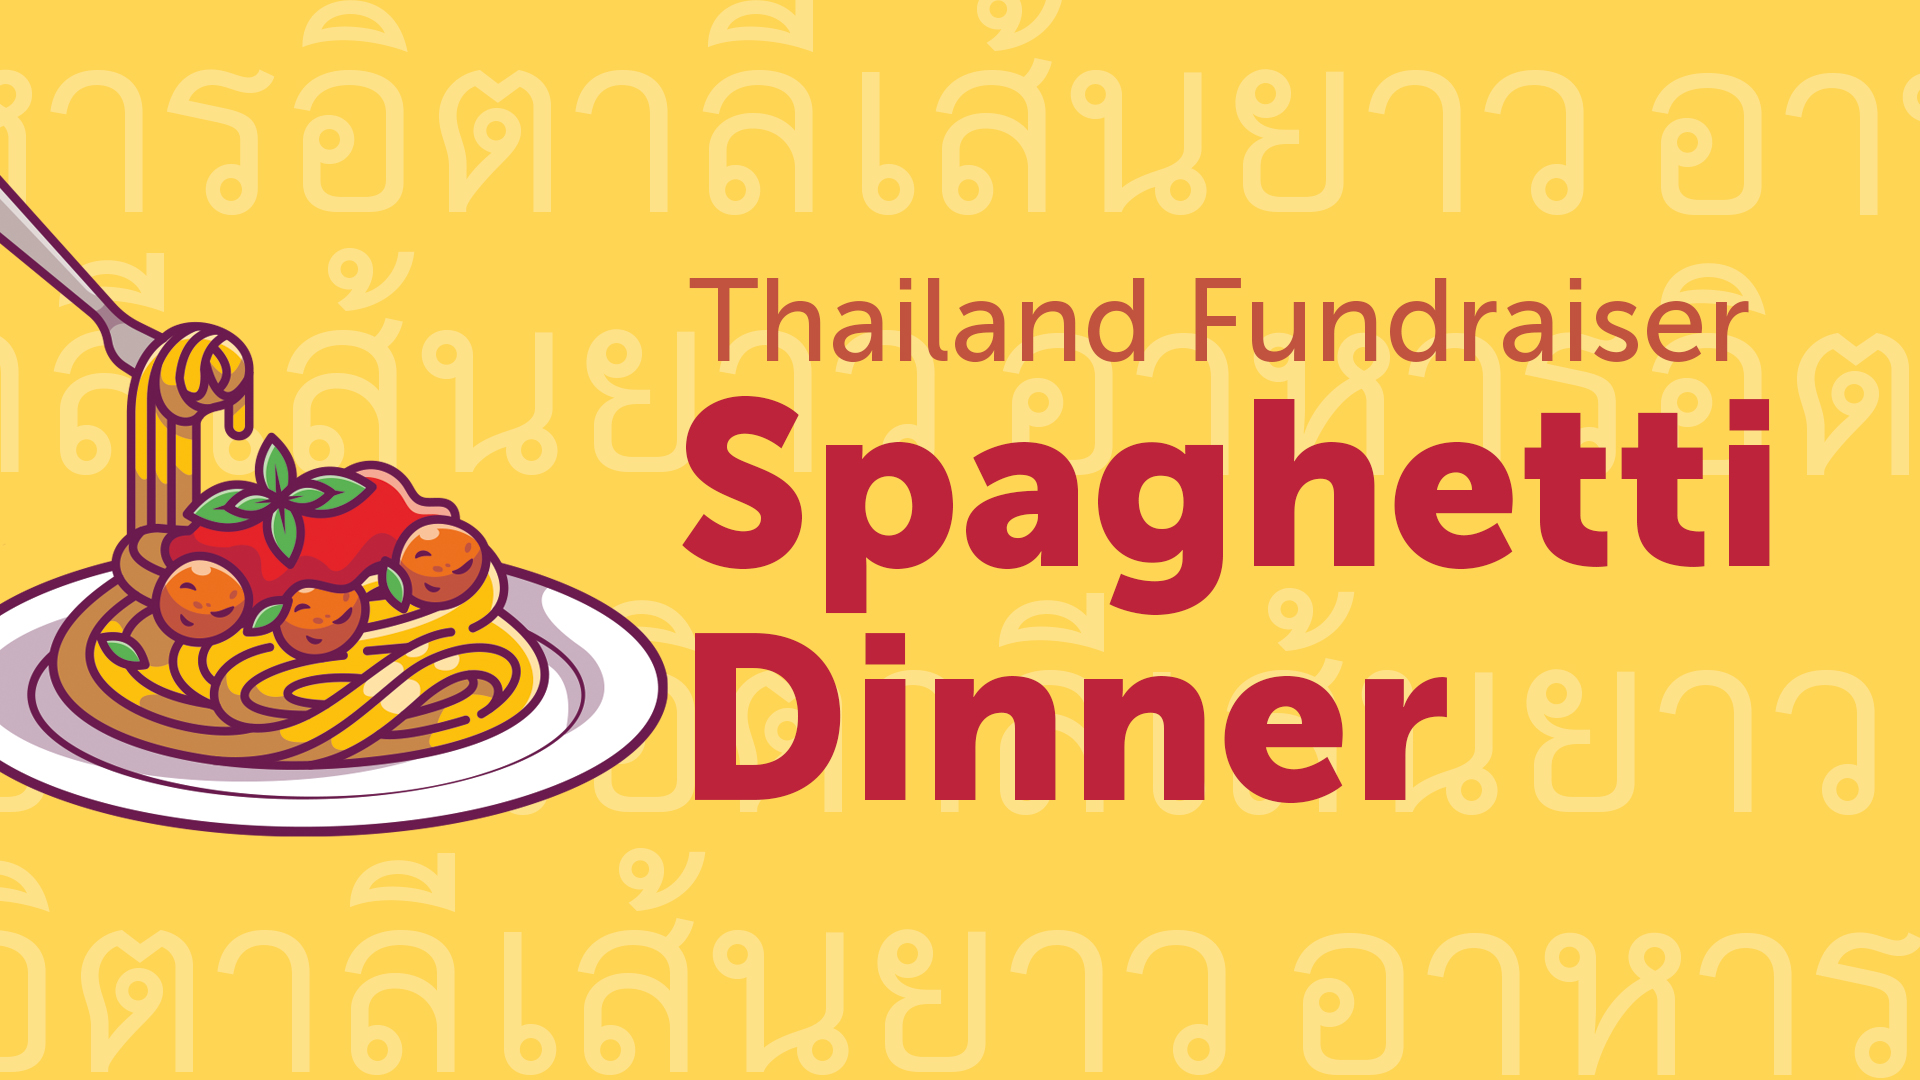 Spaghetti Dinner - Thailand Fundraiser